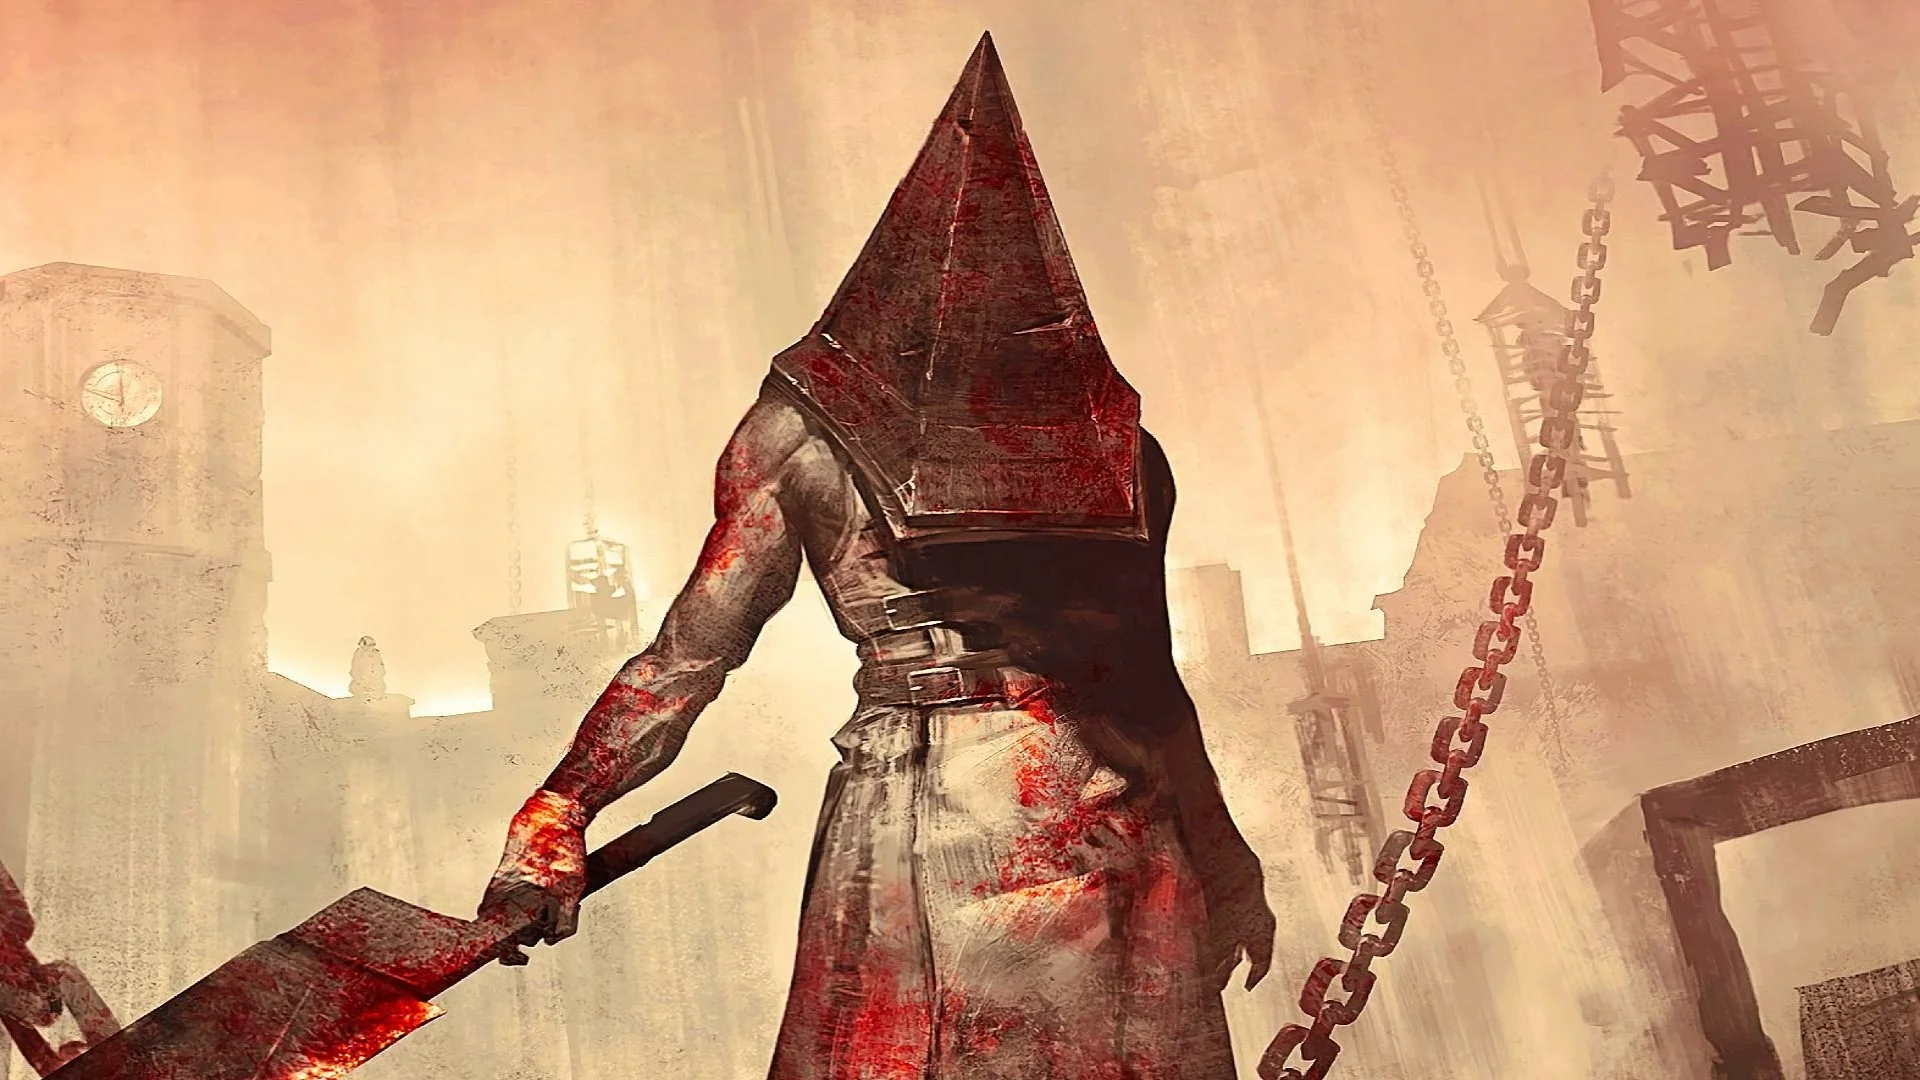 Silent Hill 2 Remake Update: Konami Quashes Pyramid Head Origin Rumors, Excitement Builds for Bloober Team's Revival